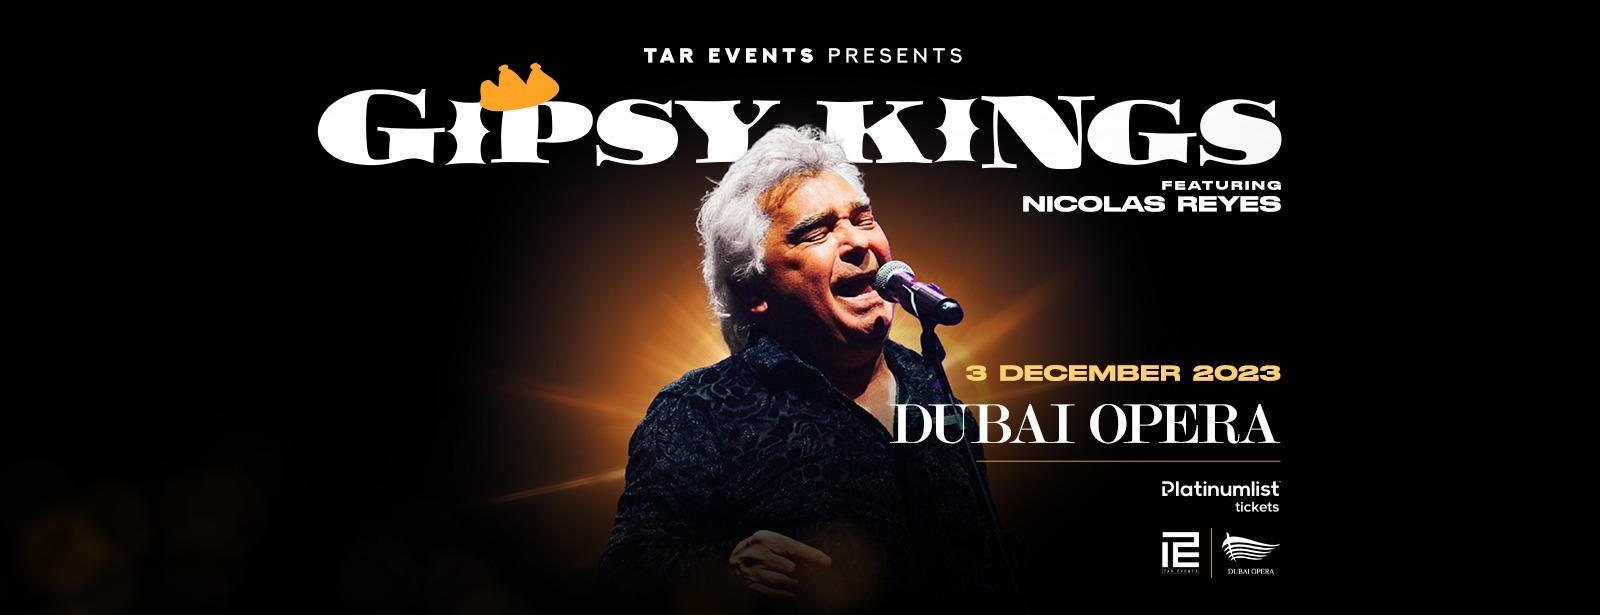 Gipsy Kings at Dubai Opera - Coming Soon in UAE